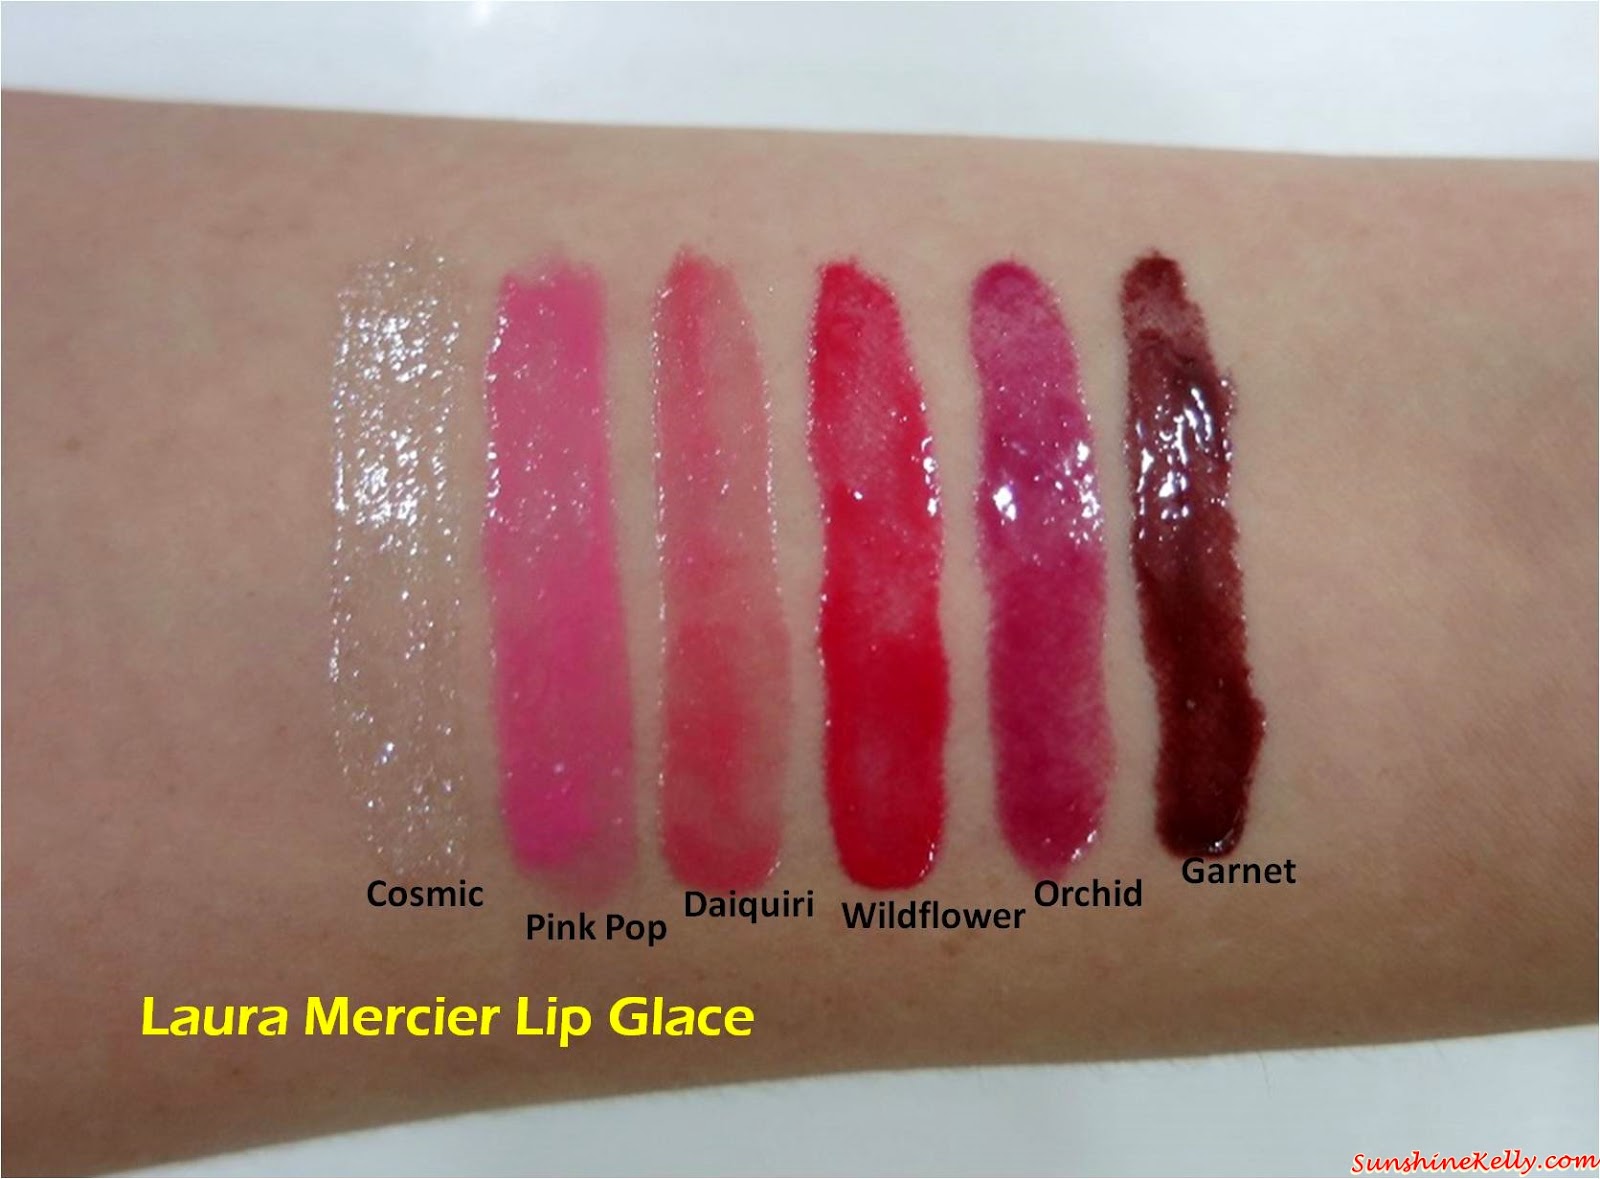 Laura Mercier Lip Glace Review, Laura Mercier, Lip Glace, Makeup Review, Lip Gloss, Cosmic, Pink Pop, Daiquiri, Wildflower, Orchid, Garnet